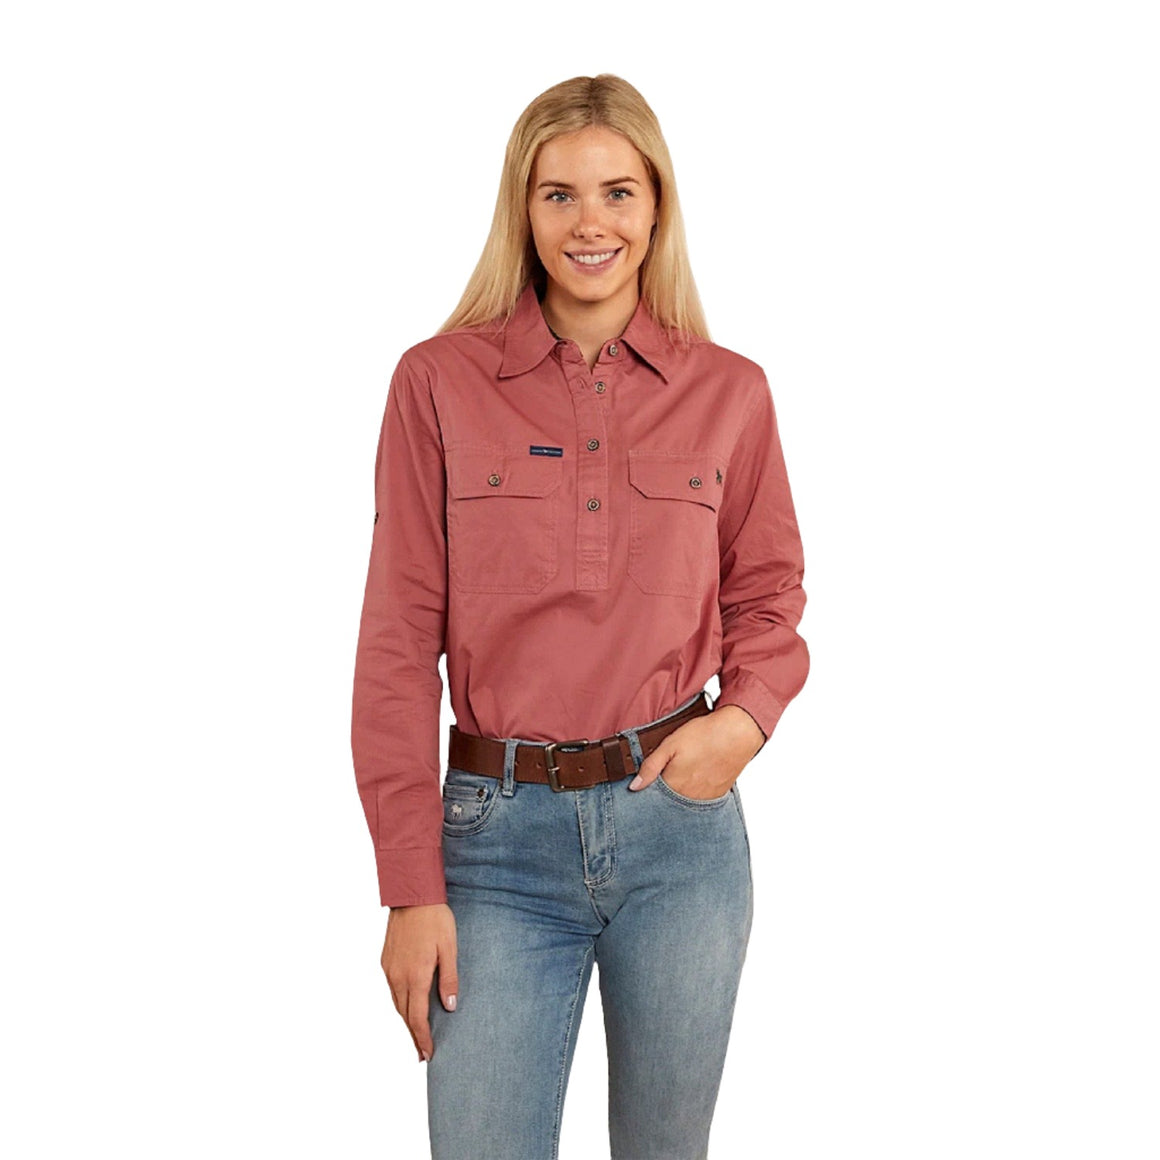 Ringers Western Pentecost River Women's Half Button Work Shirt - Dusty Rose